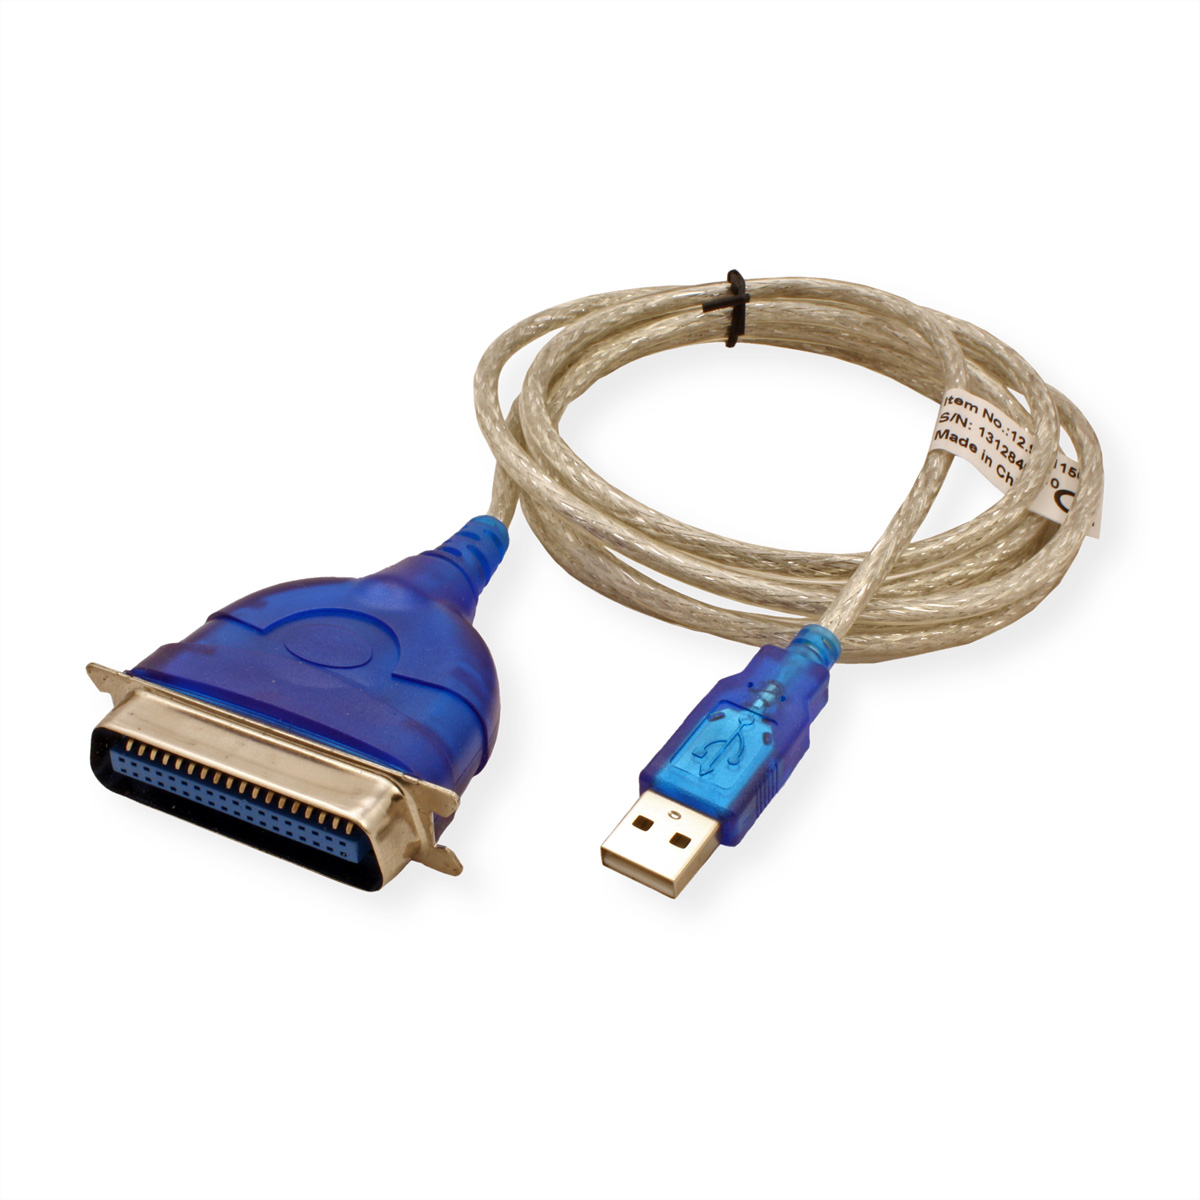 Kabel 1284 VALUE USB nach USB-Parallel IEEE Konverter Konverter USB